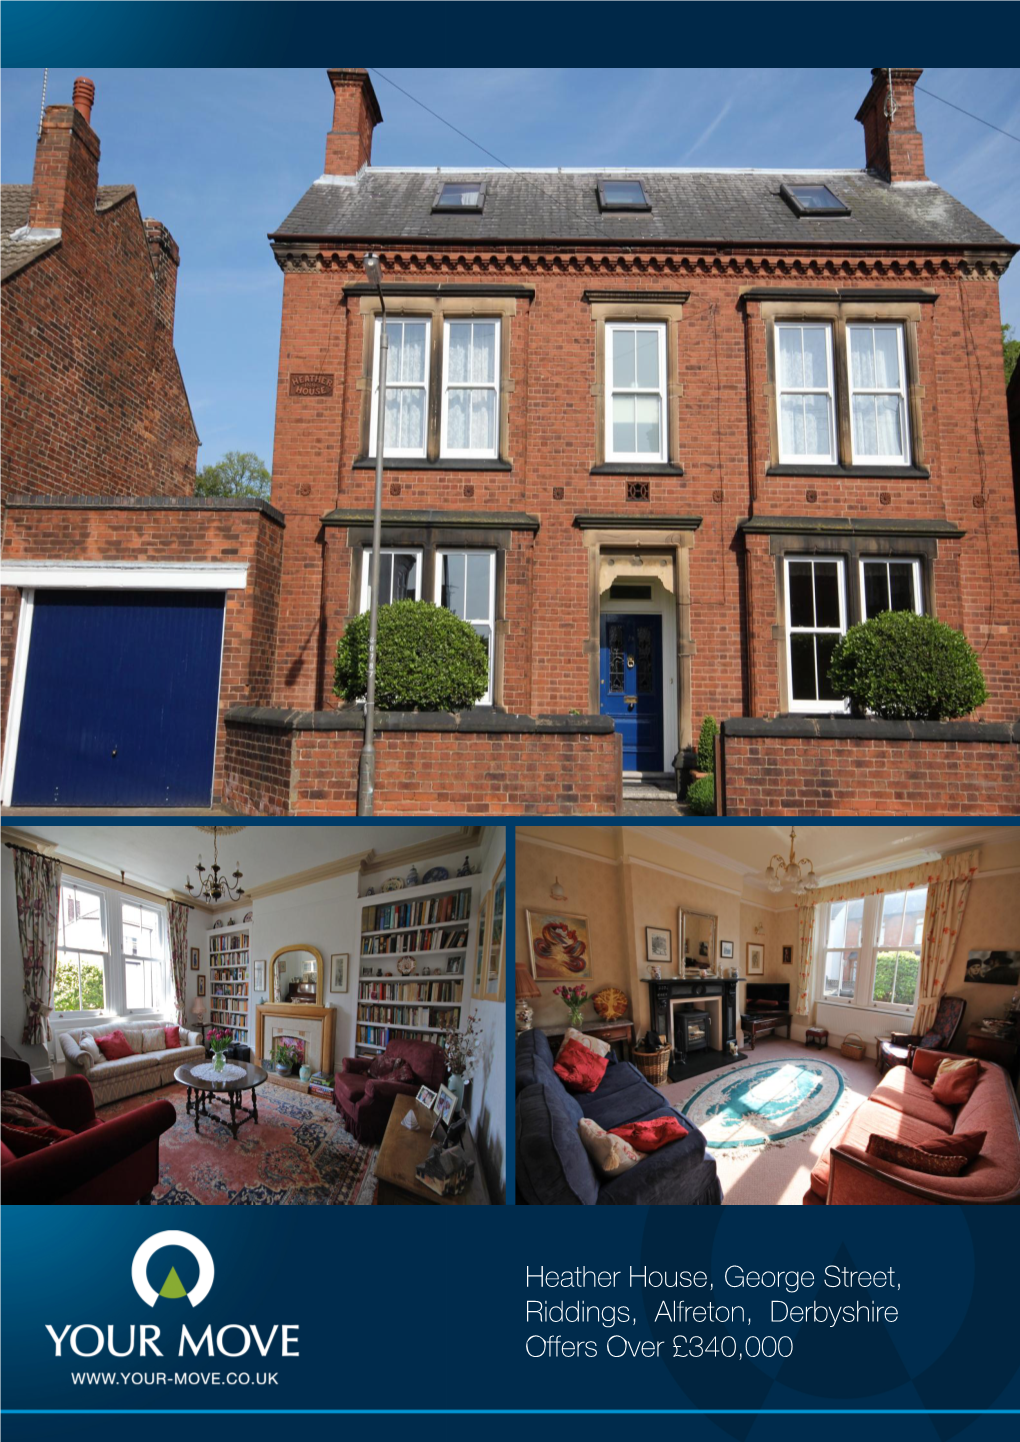 Heather House, George Street, Riddings, Alfreton, Derbyshire Offers Over £340,000 George Street, Riddings, Alfreton, Derbyshire